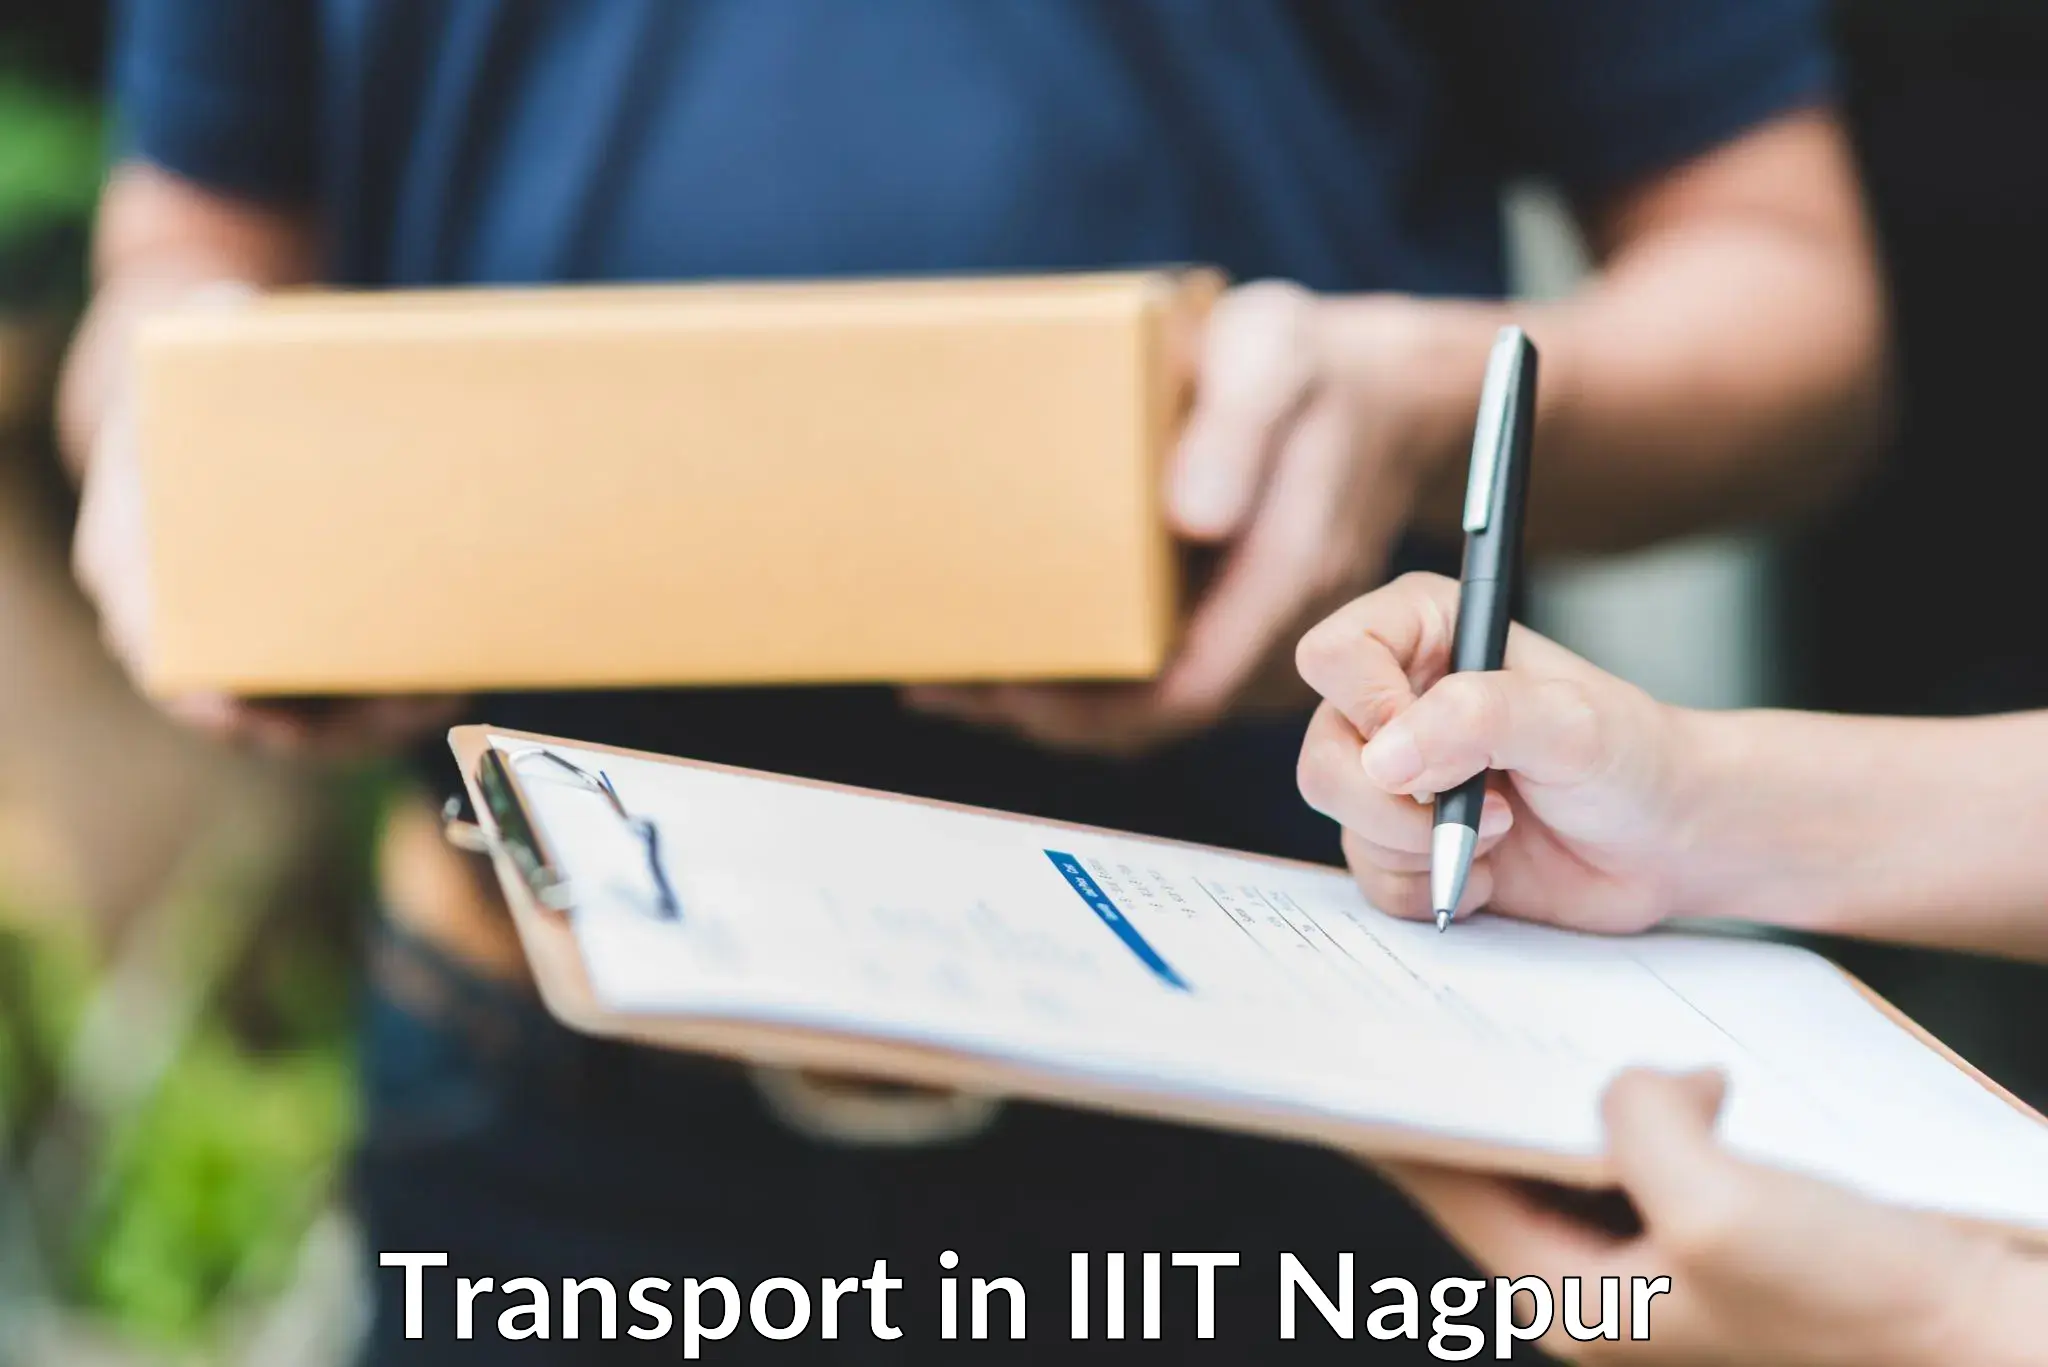 Bike transfer in IIIT Nagpur